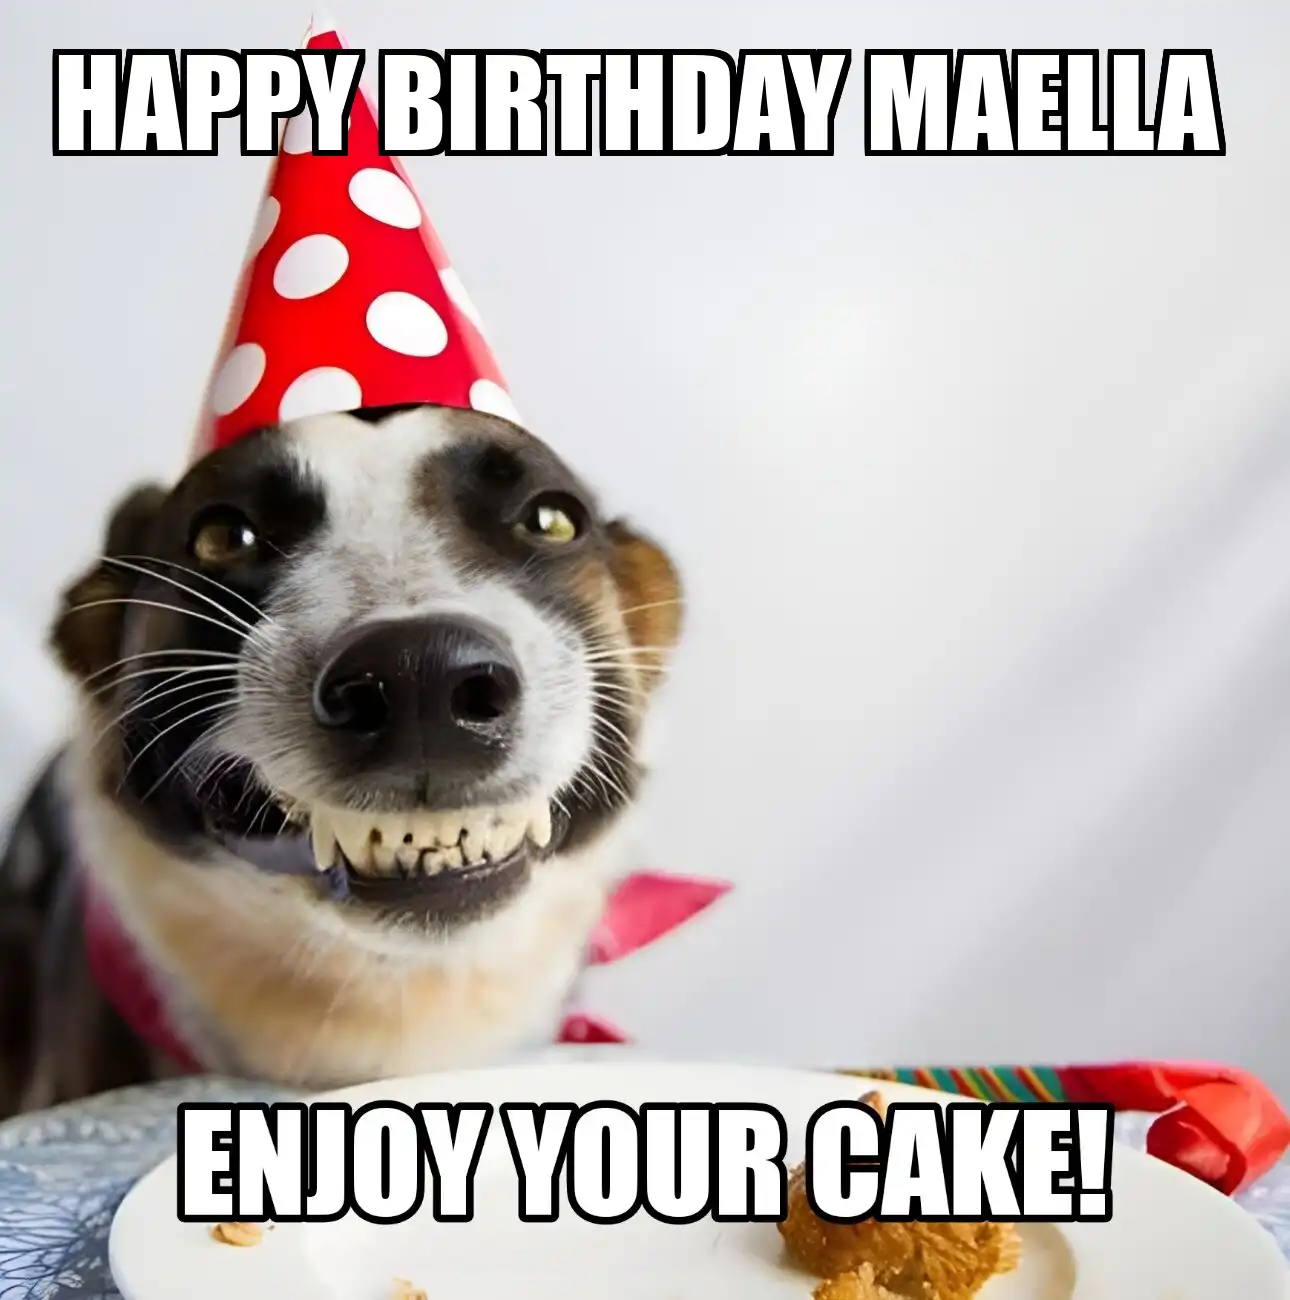 Happy Birthday Maella Enjoy Your Cake Dog Meme